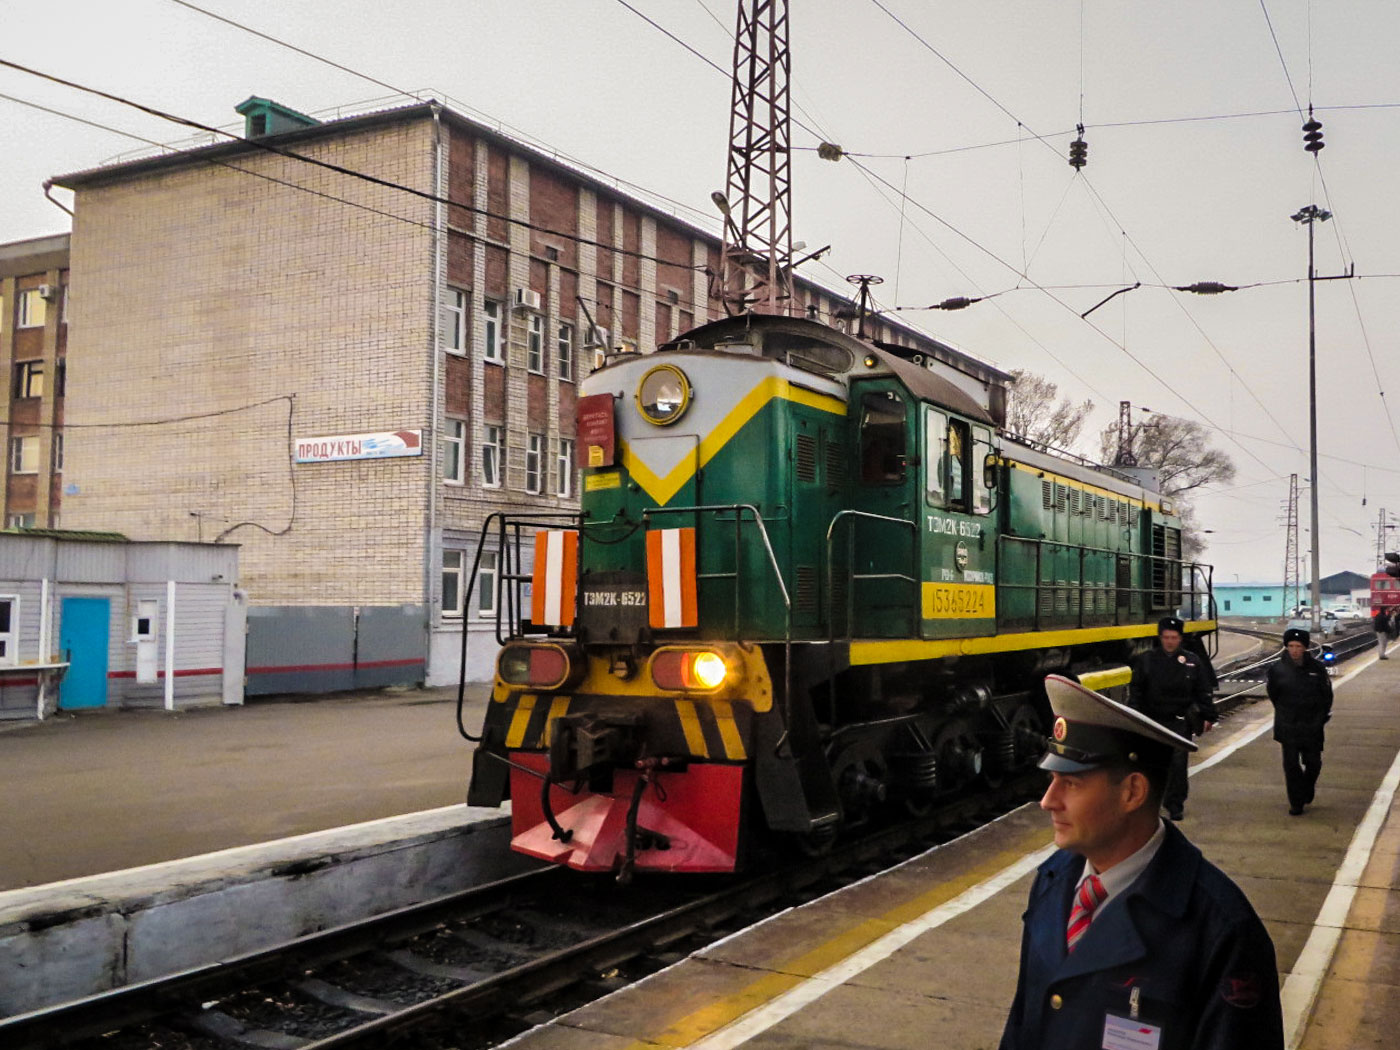 The Trans-Siberian Railway station